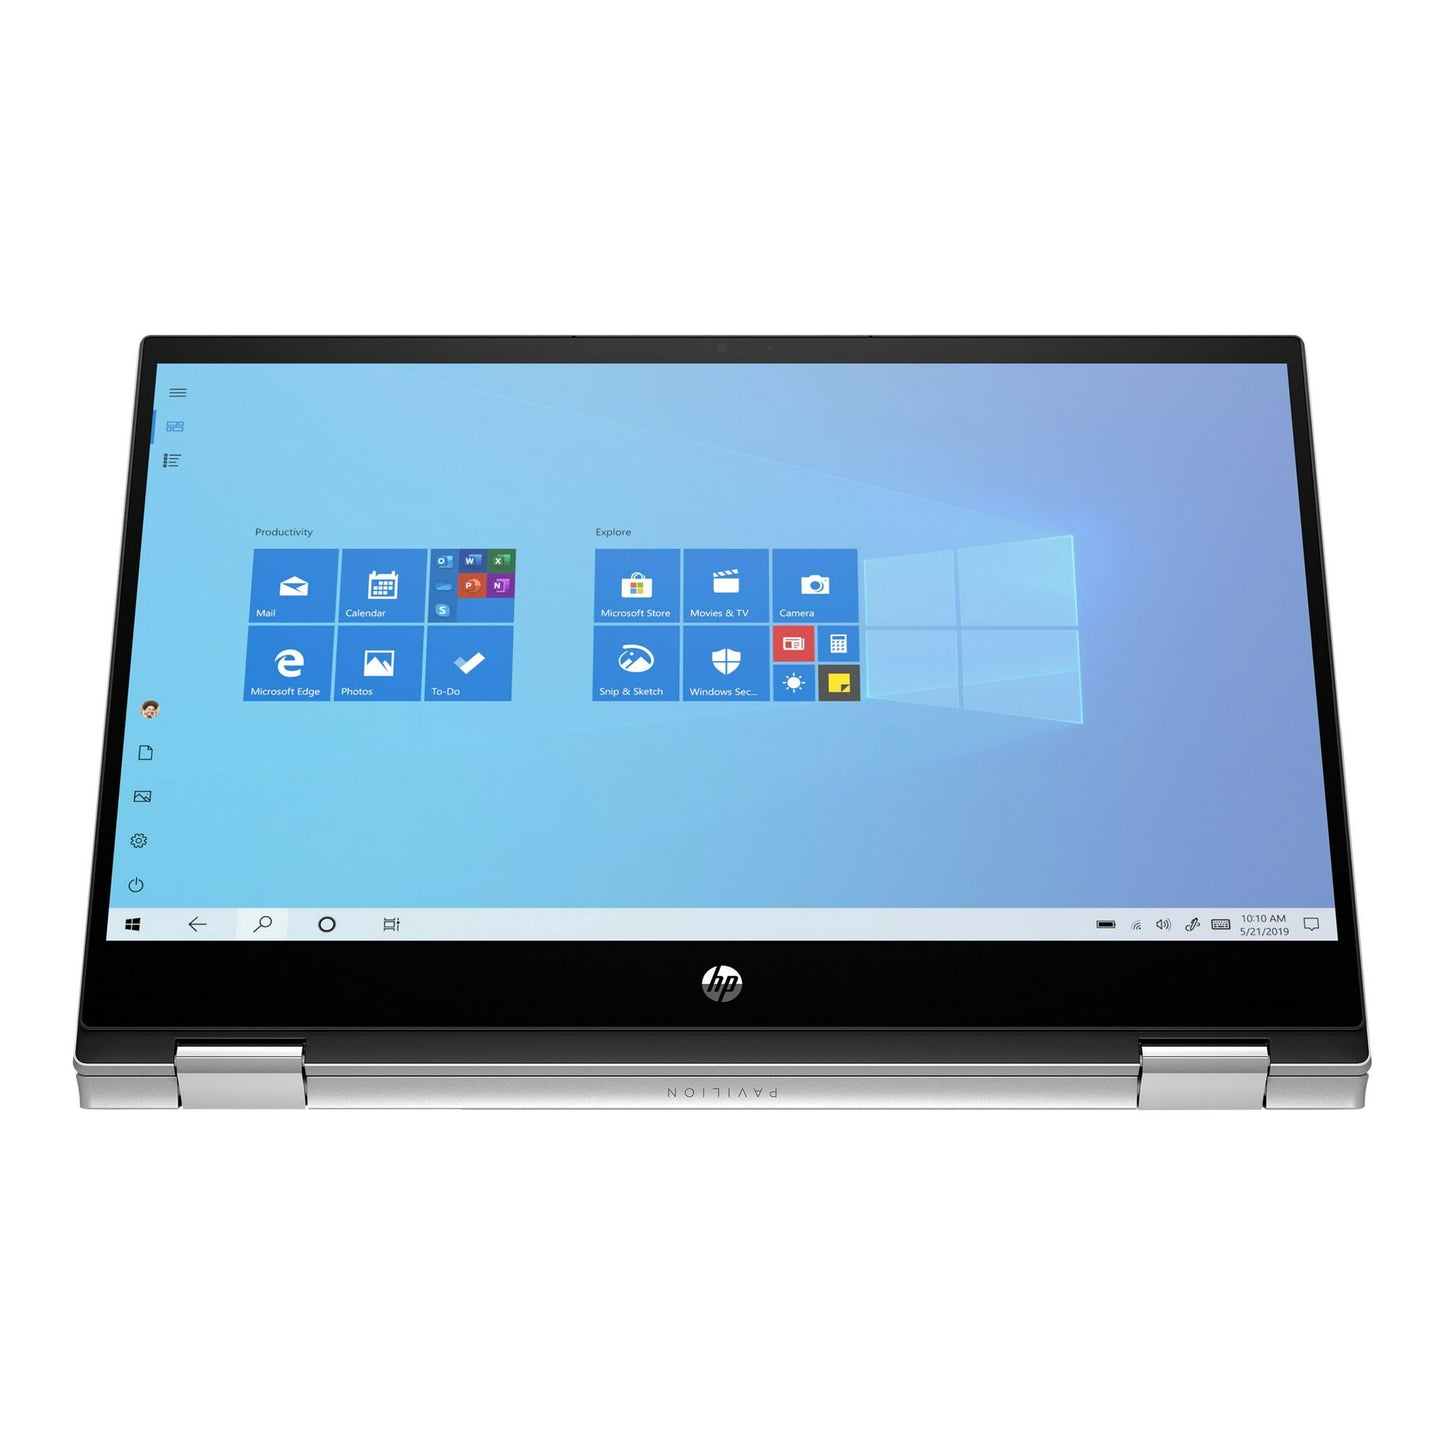 HP Pavilion x360 14" Core i3 10th 8GB 128GB SSD Touchscreen Laptop - 9GE49UA#ABA 539.99